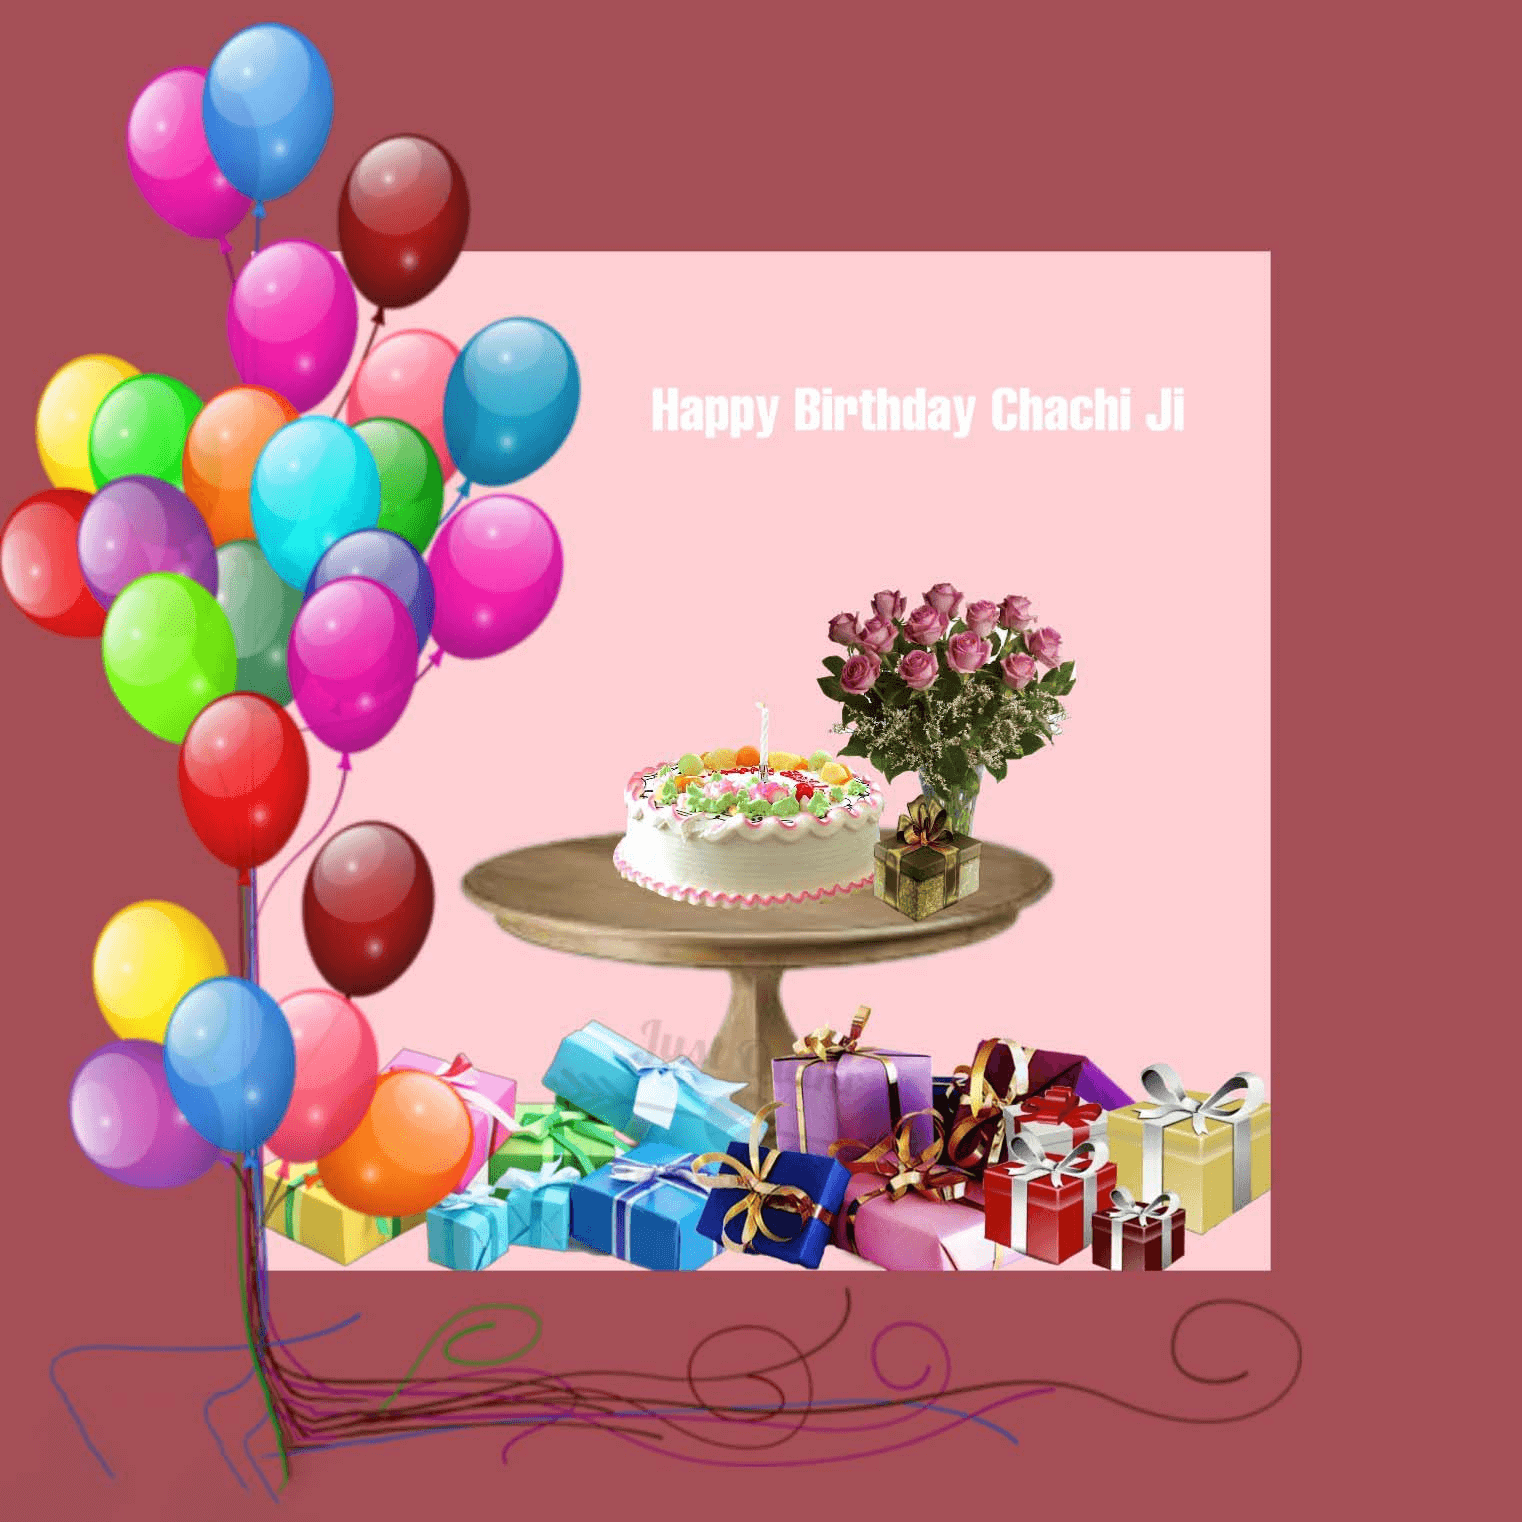 Special Happy Birthday Cake Wish Pic